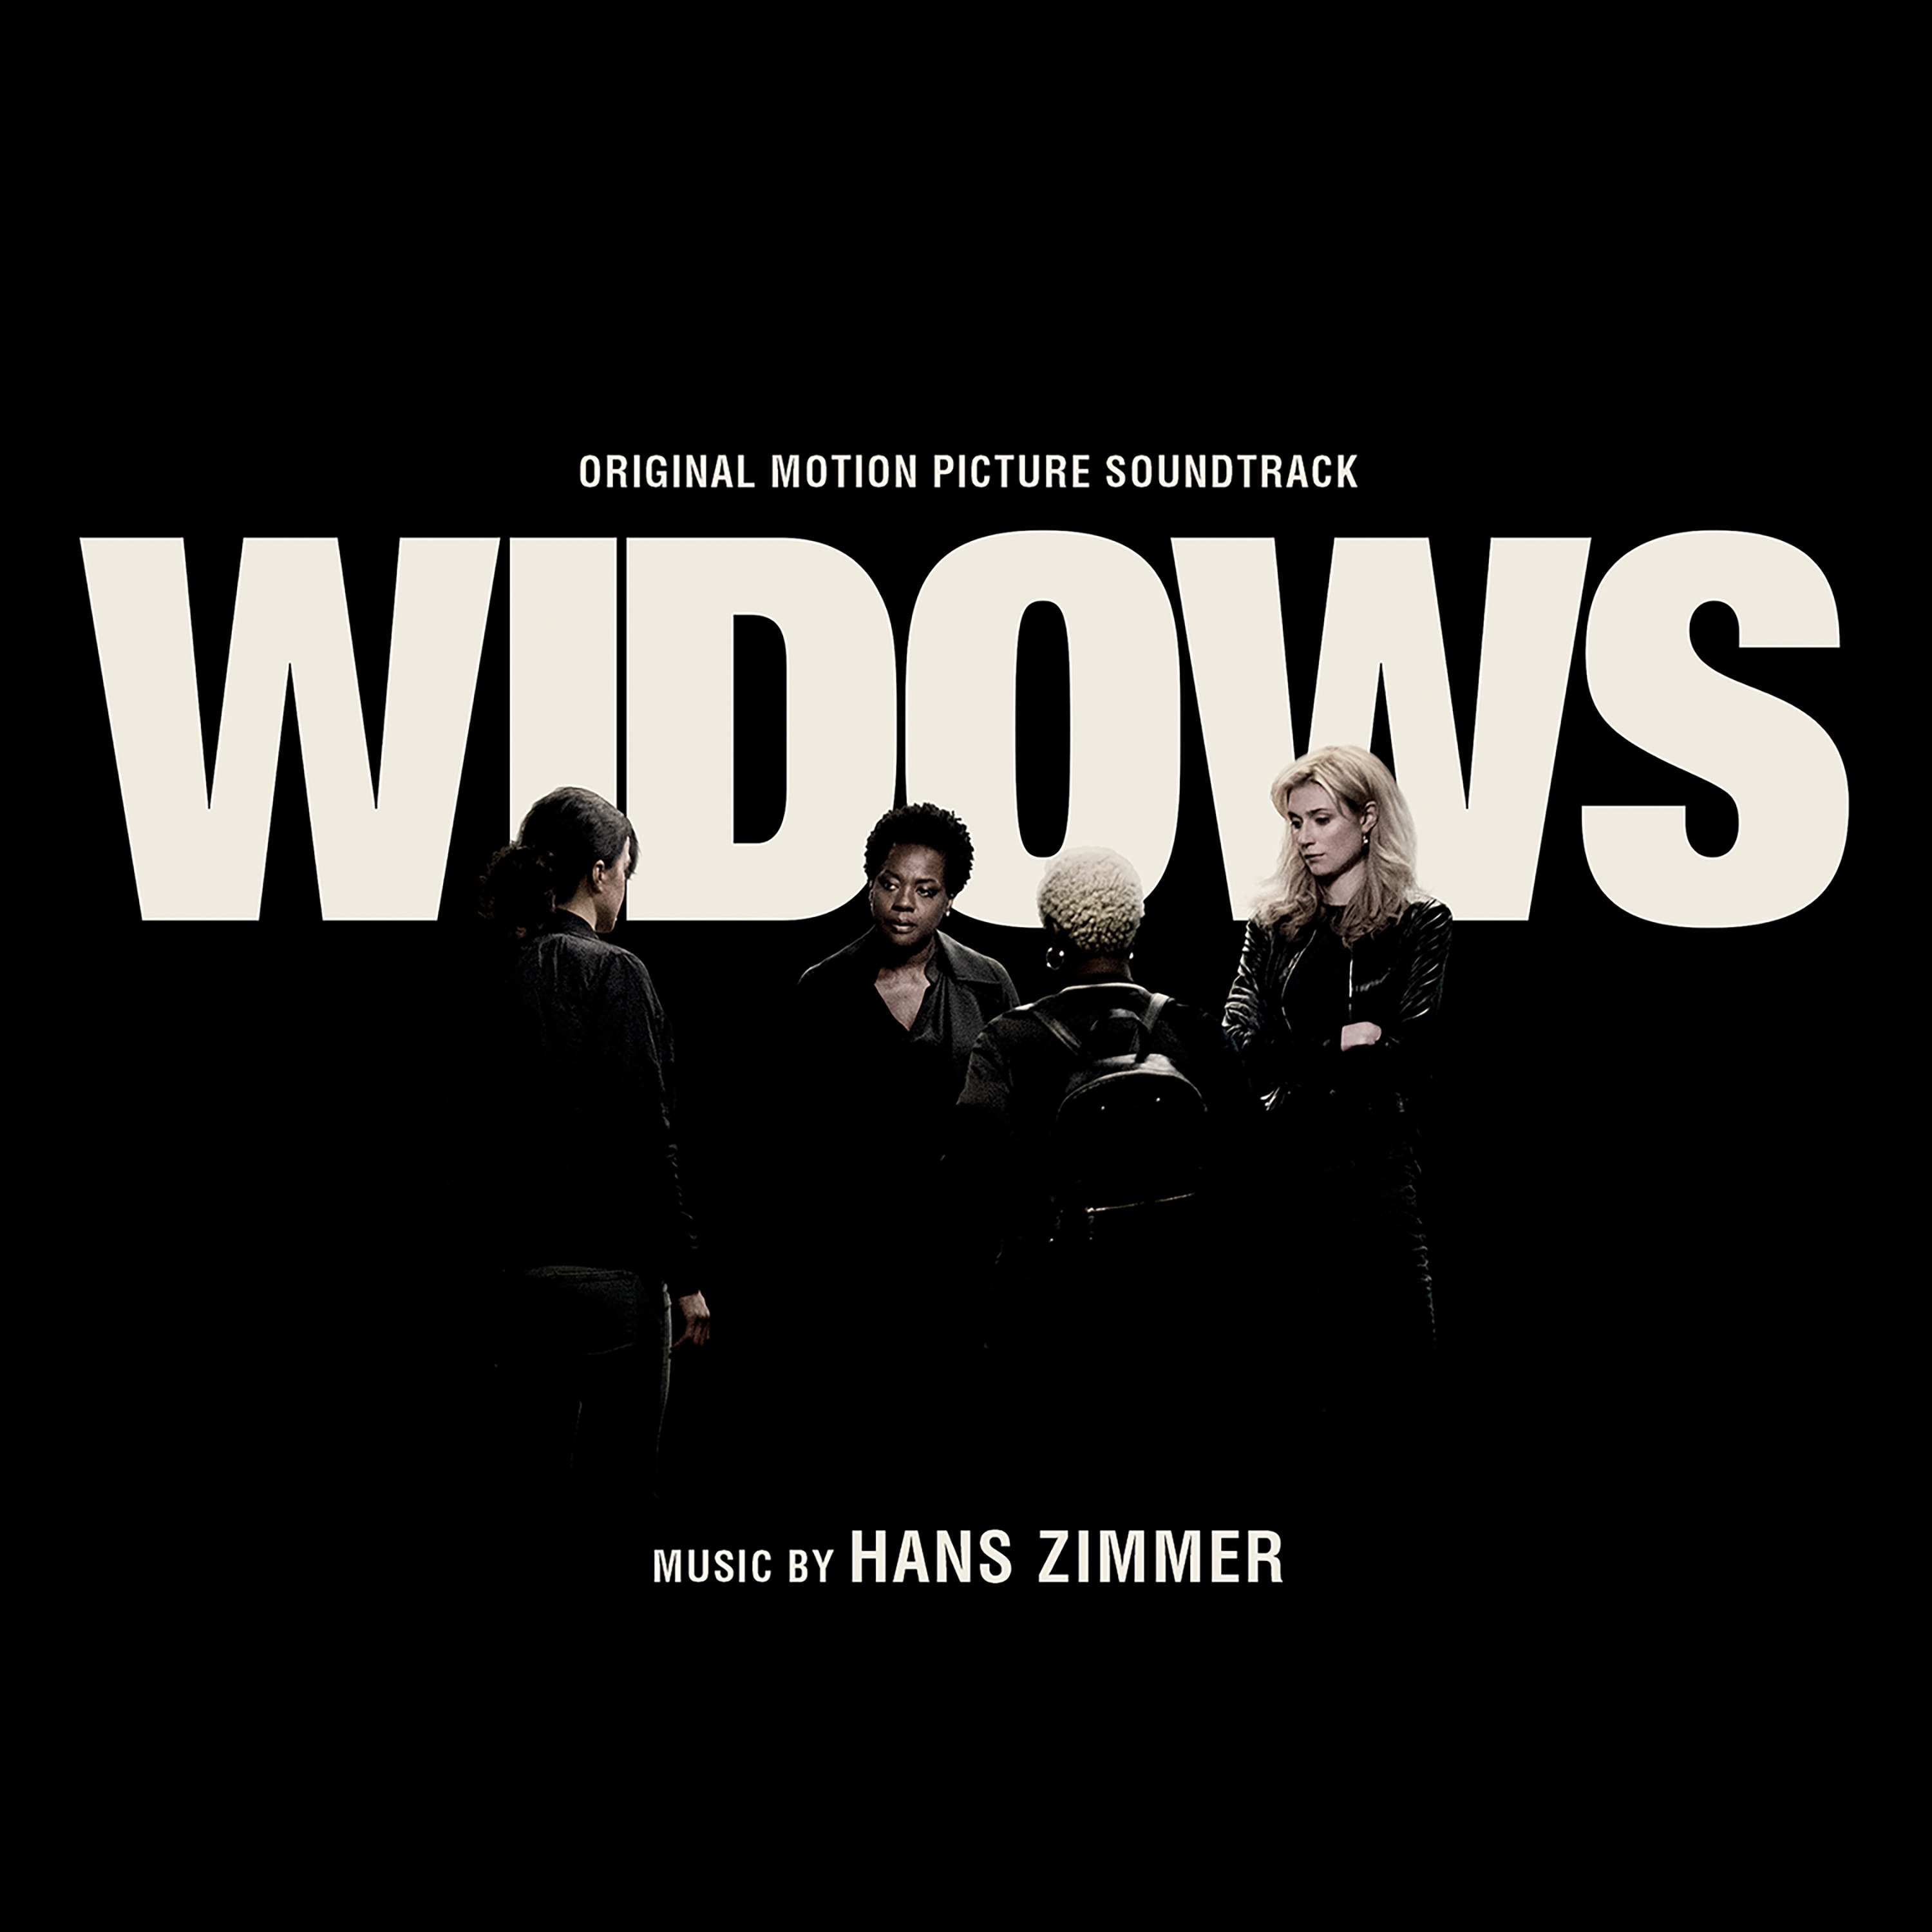 Вдова музыка. Саундтреки. "Hans Zimmer" && ( исполнитель | группа | музыка | Music | Band | artist ) && (фото | photo). Саундтрек. Soundtrack.